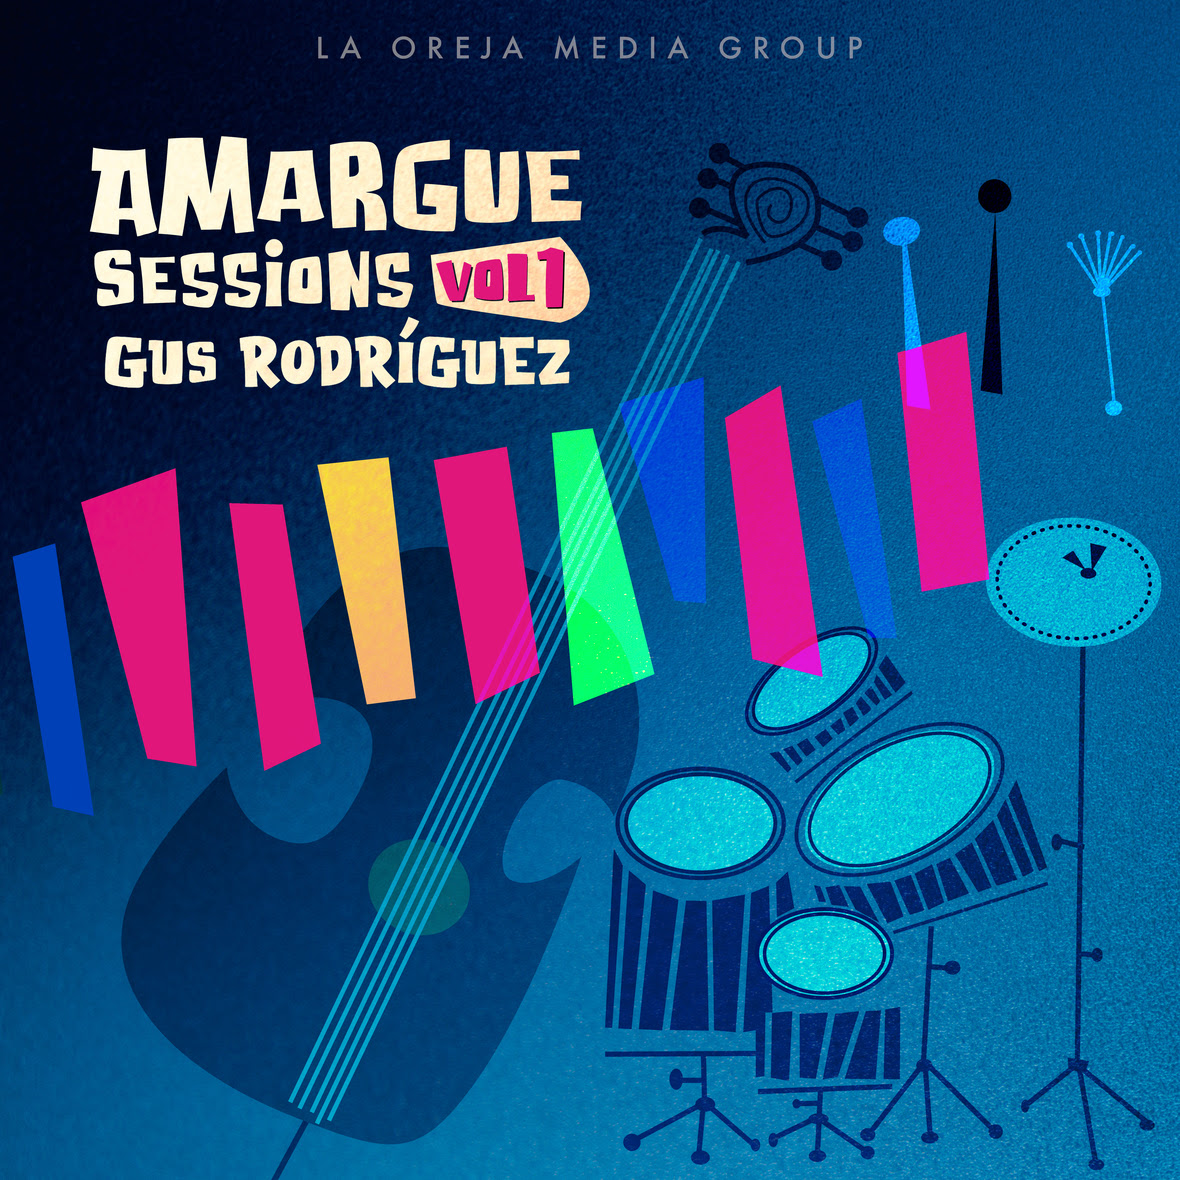 La Oreja Media Group presenta el álbum de jazz “Amargue Sessions Vol. 1” de Gus Rodríguez